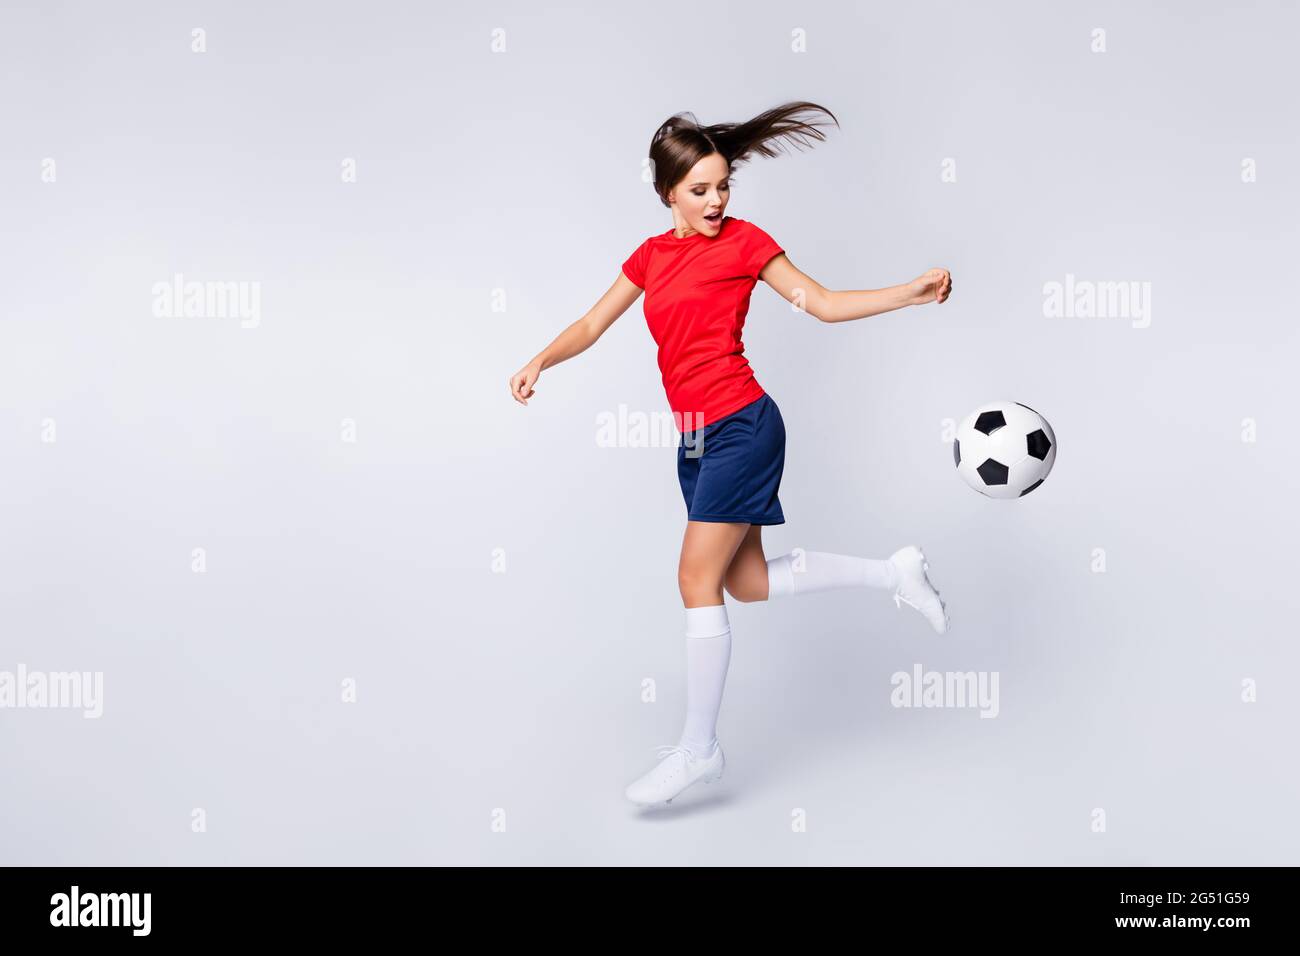 Perfil completo foto de cool joy air fly jugador fútbol equipo kick ball ejercicio salto captura pase correr ropa de fútbol camiseta pantalón corto uniforme Fotografía de stock - Alamy